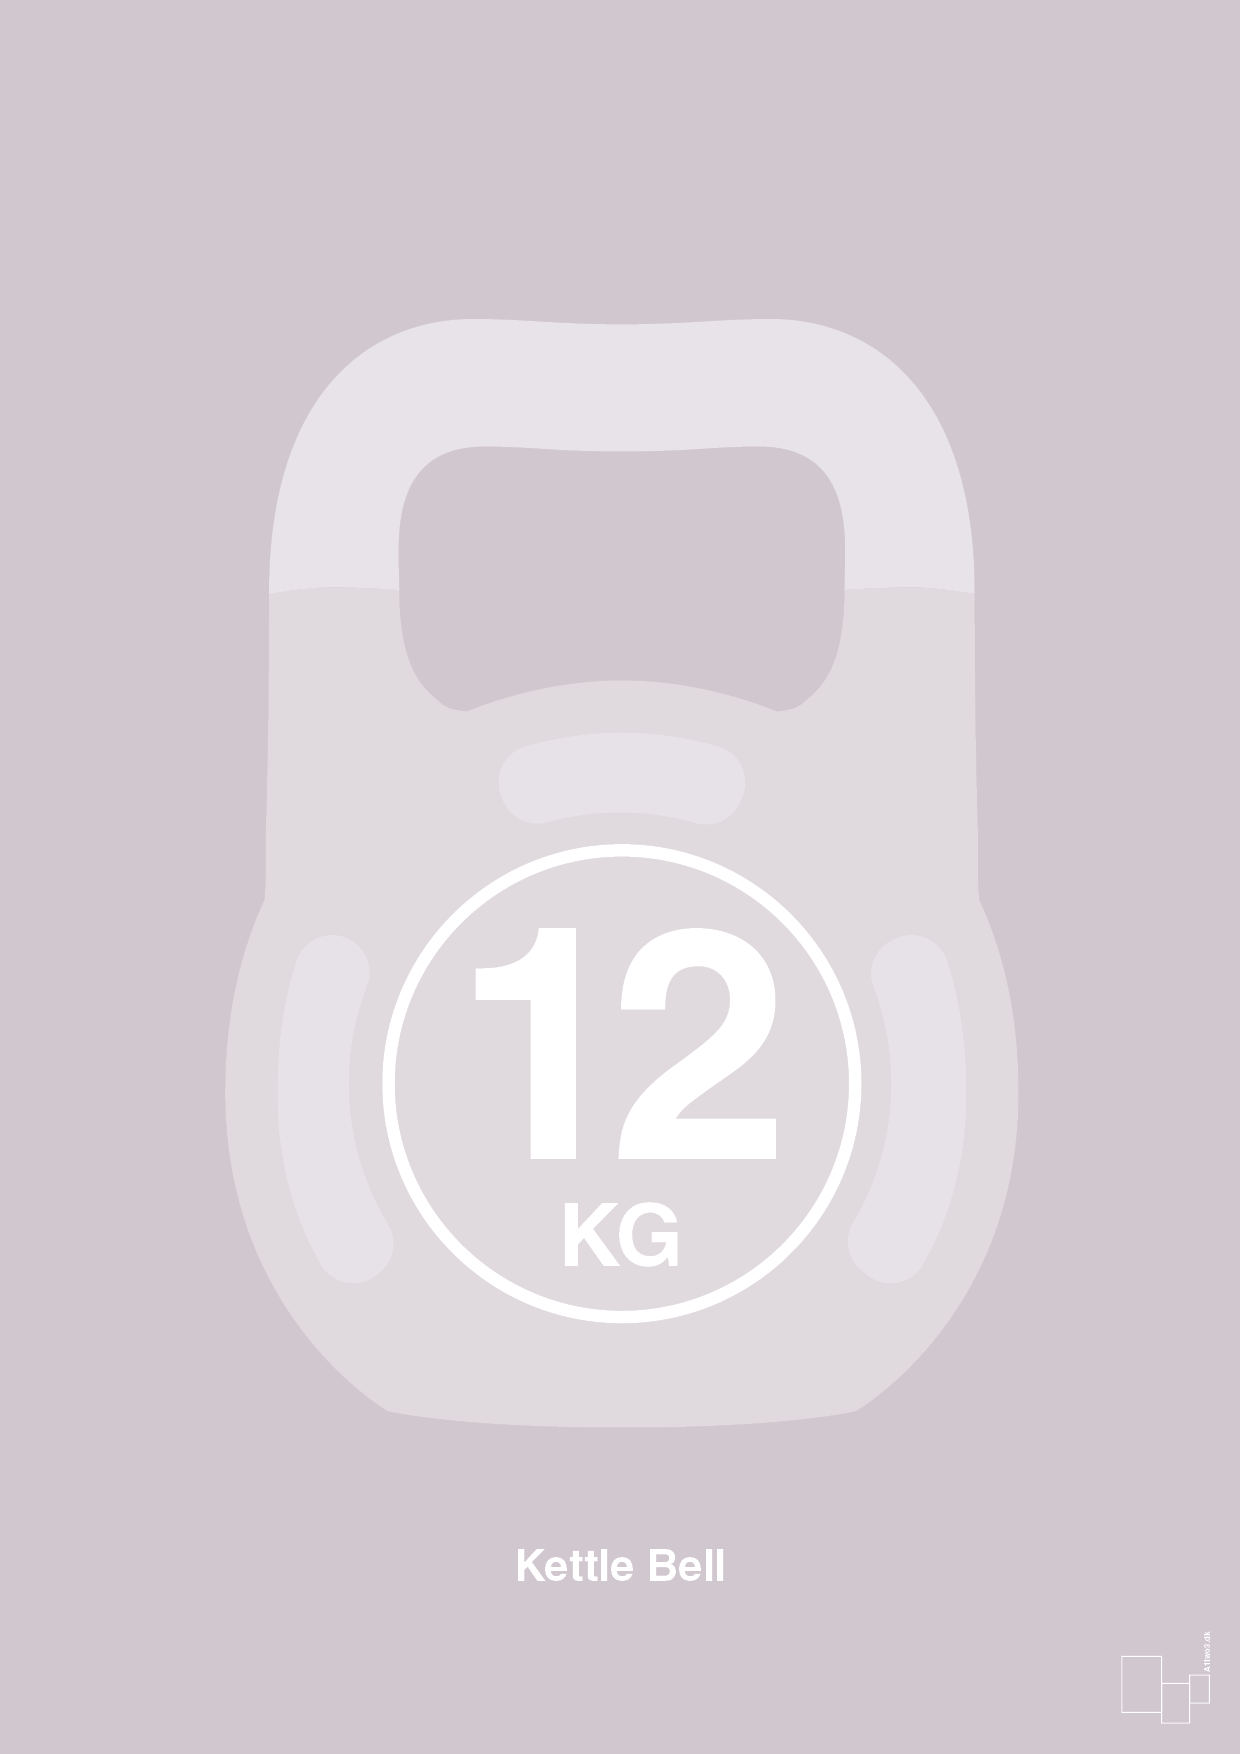 kettle bell 12 kg - Plakat med Grafik i Dusty Lilac